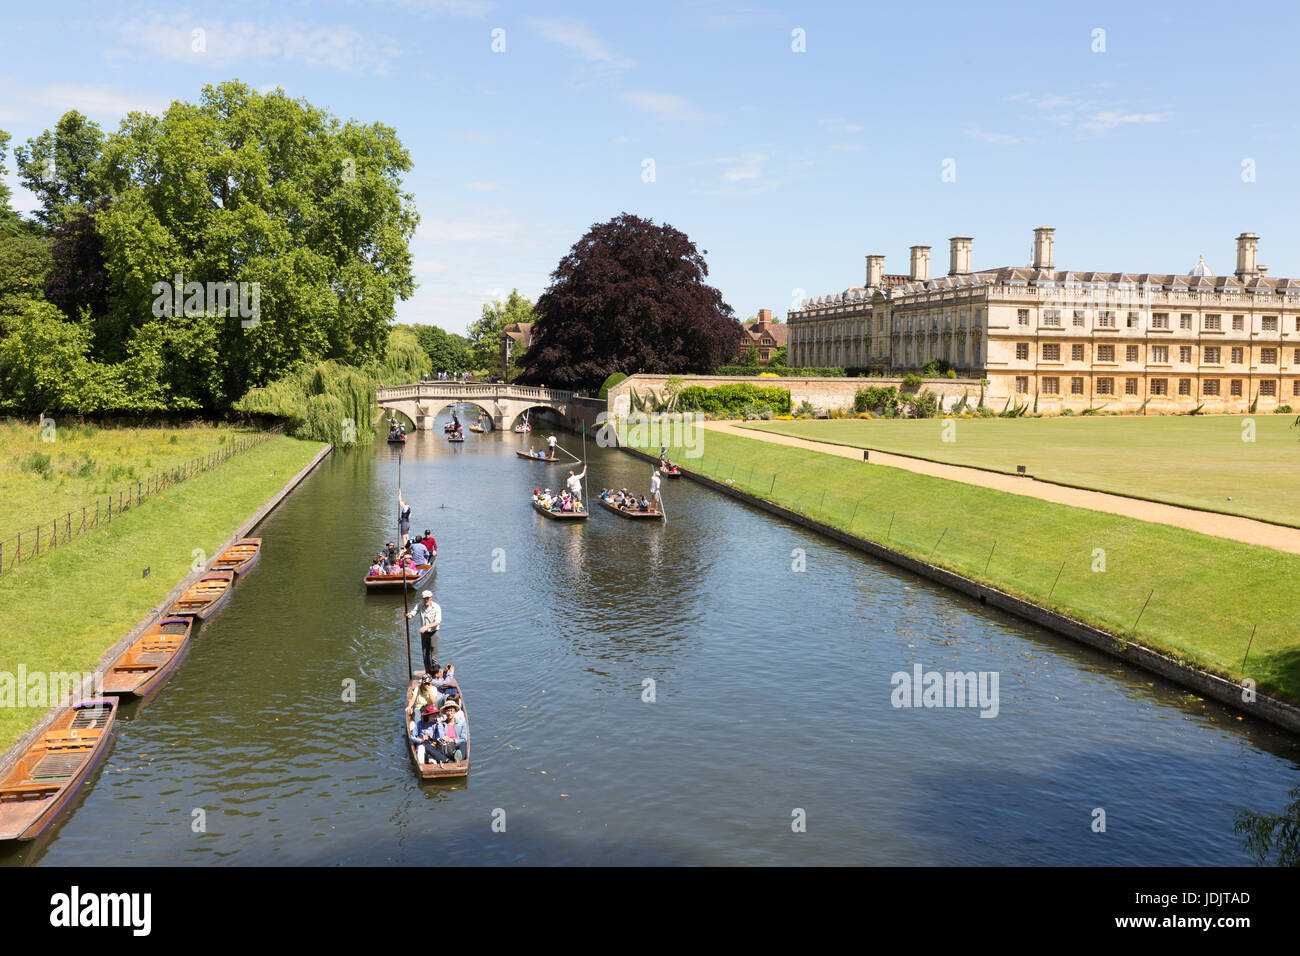 Stechkahn fahren Cambridge UK - Stechkahn fahren im Sommer auf dem Rücken, den Fluss Cam Cambridge England UK Stockfoto